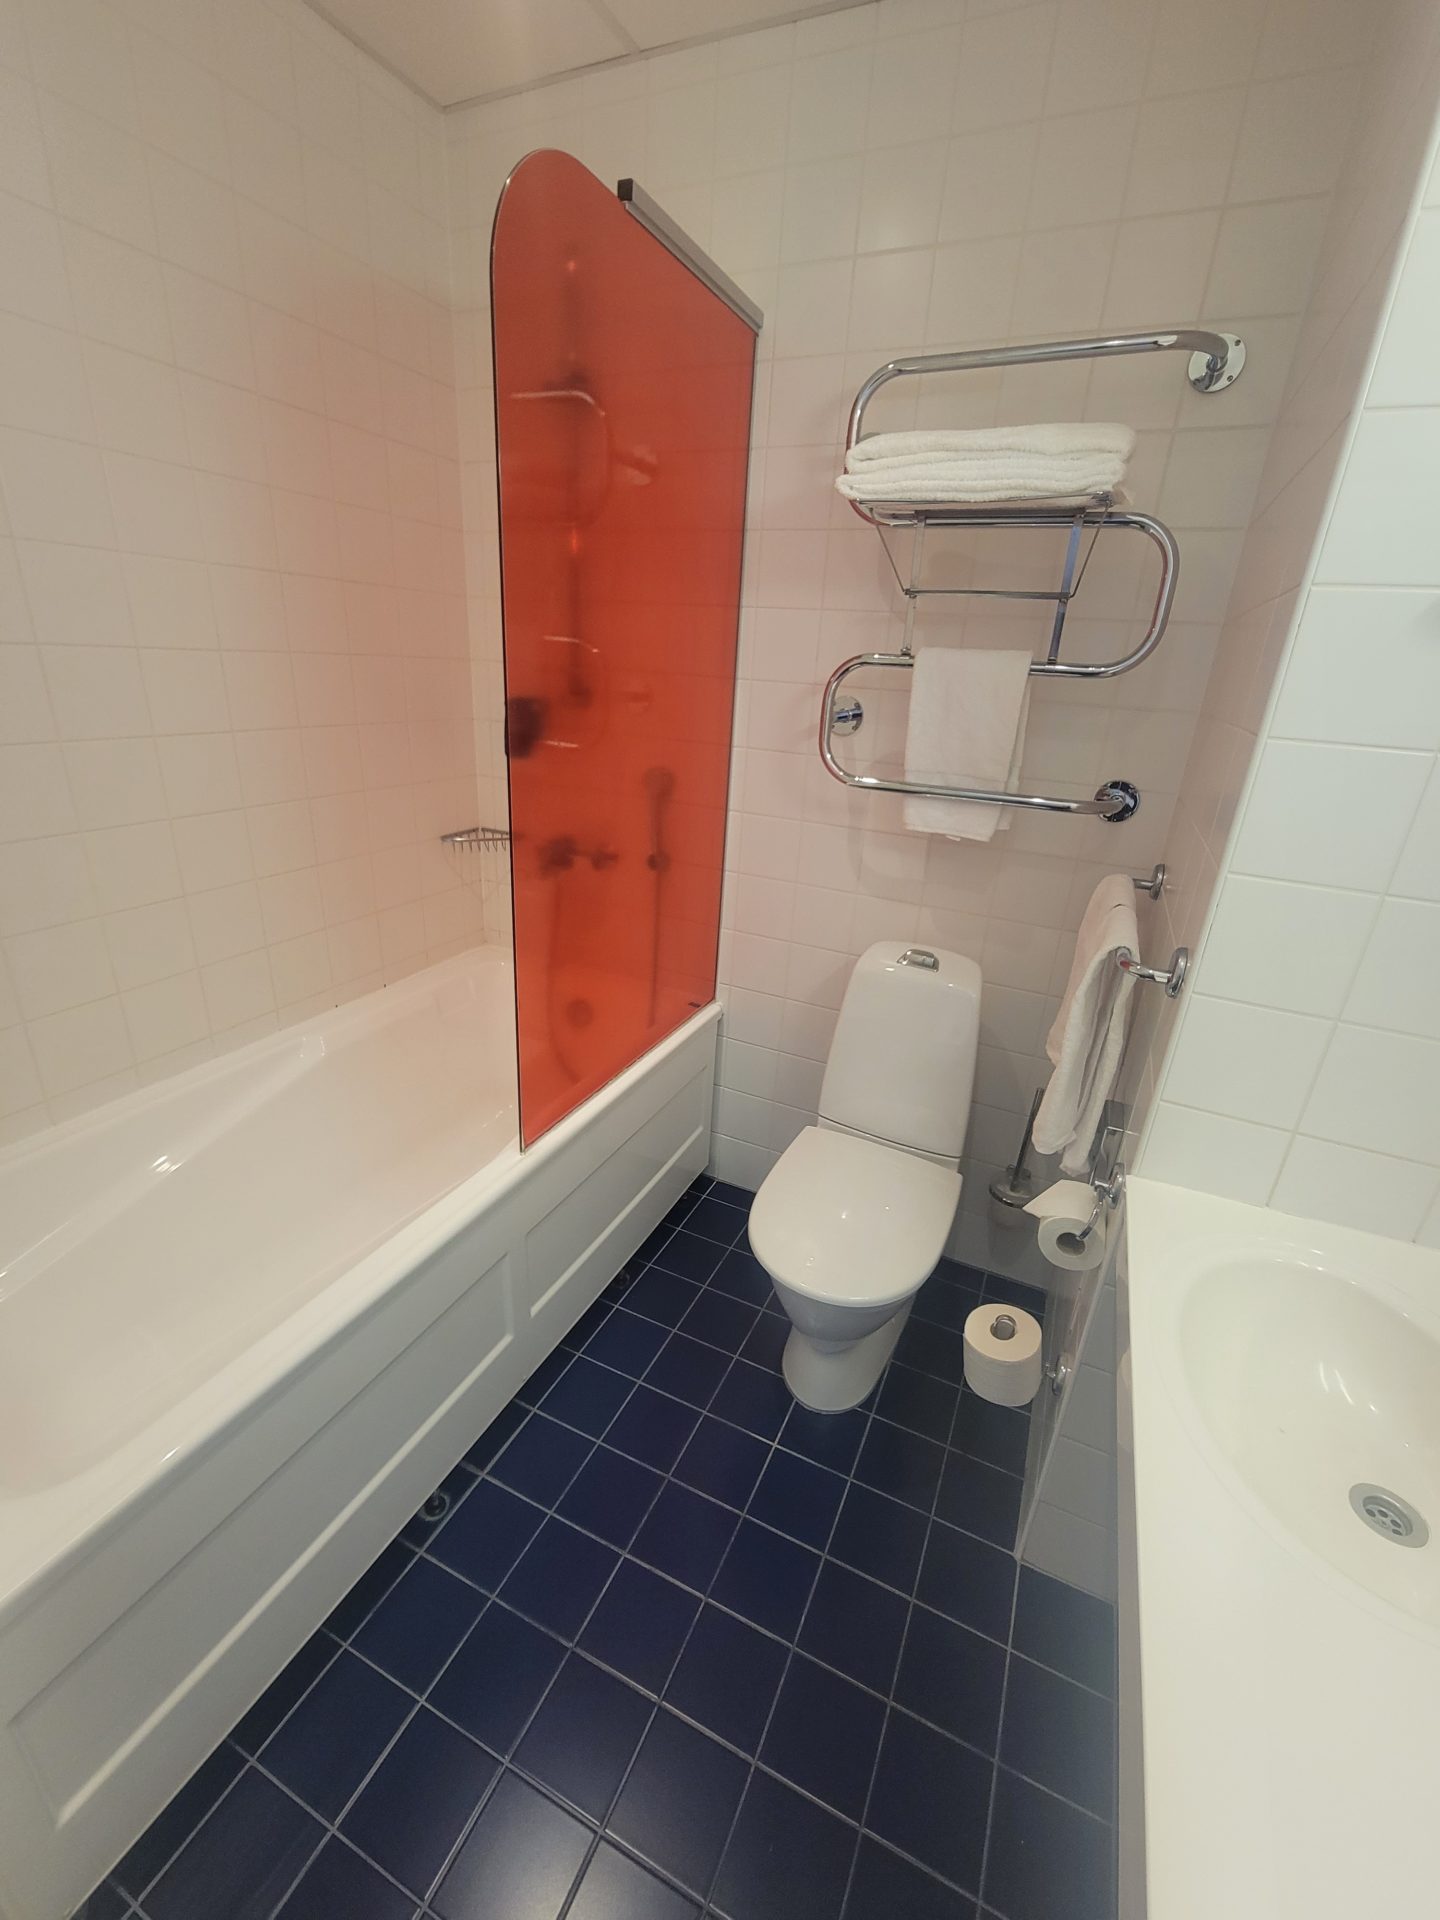 a bathroom with a bathtub and toilet